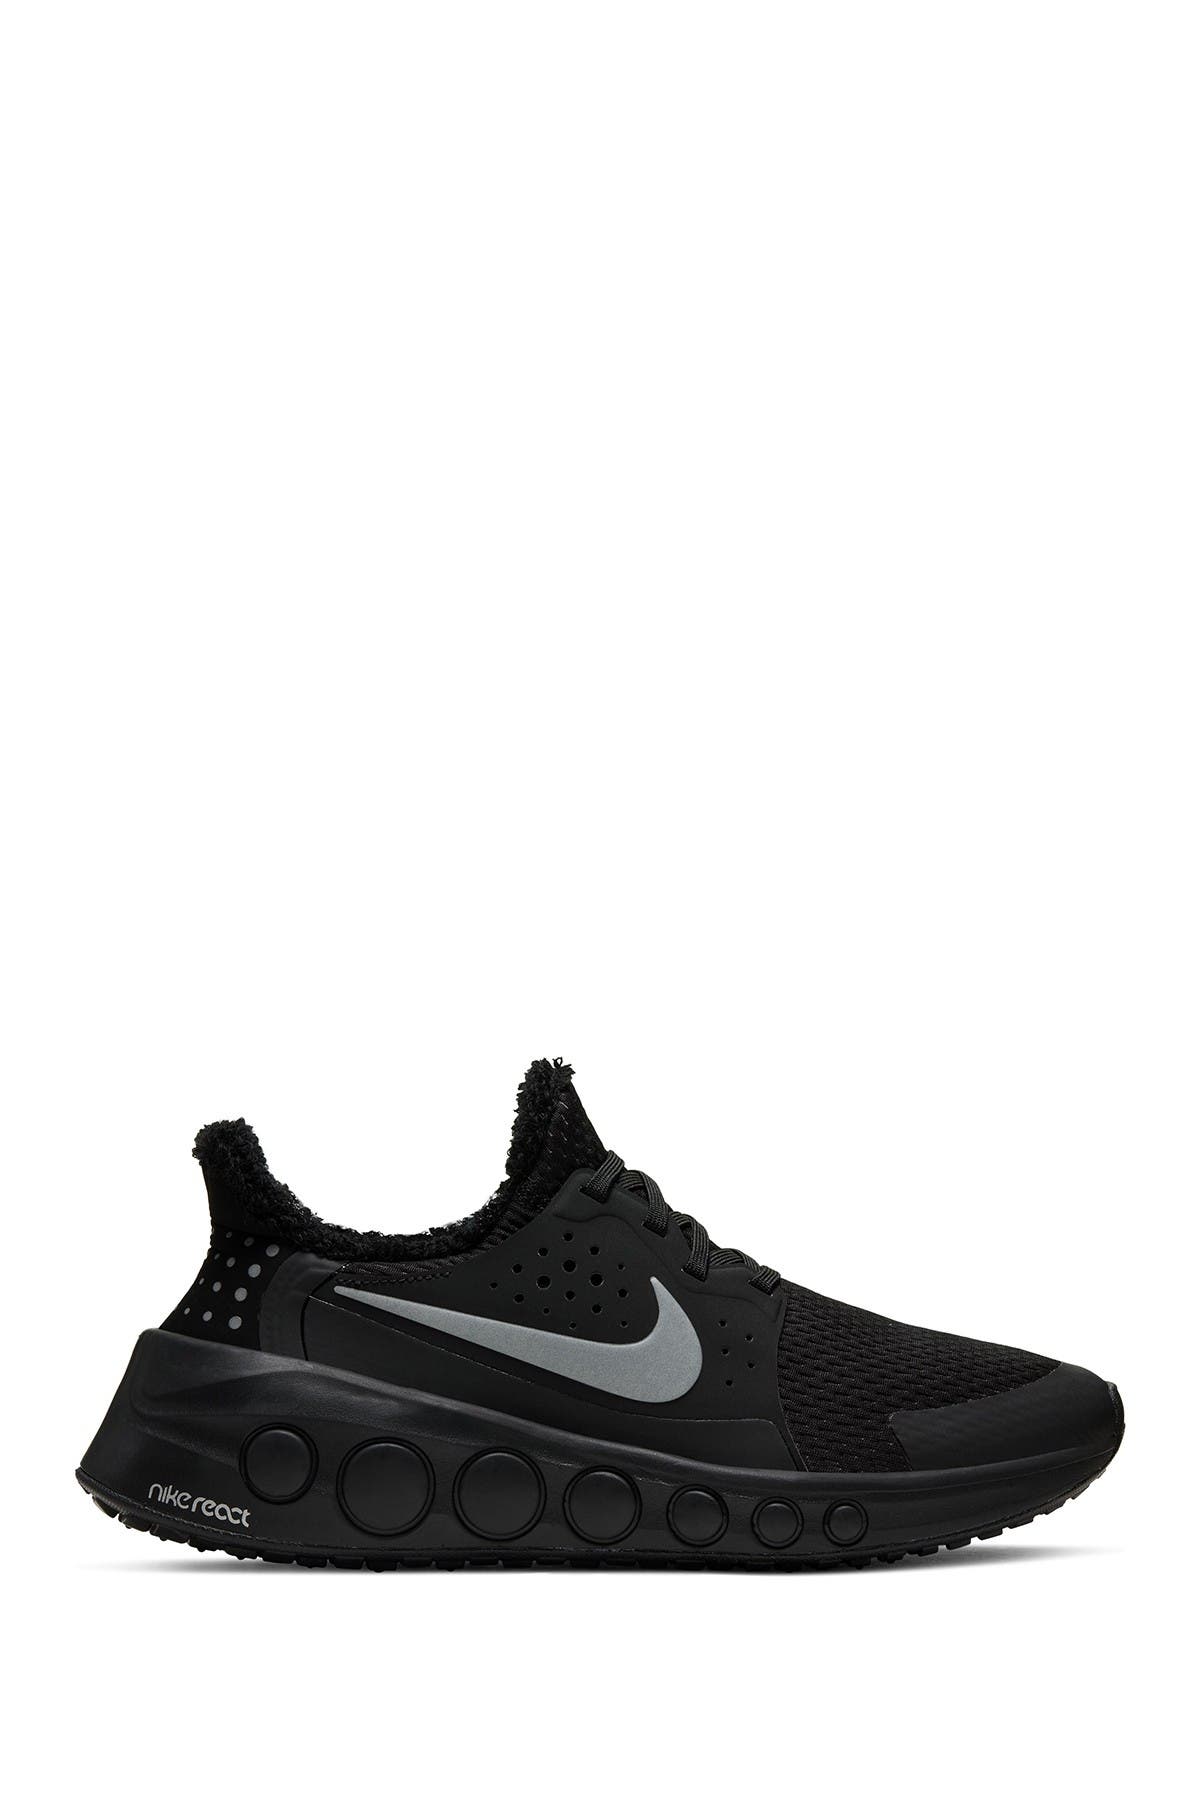 Nike | CruzrOne Triple Black Shoe 